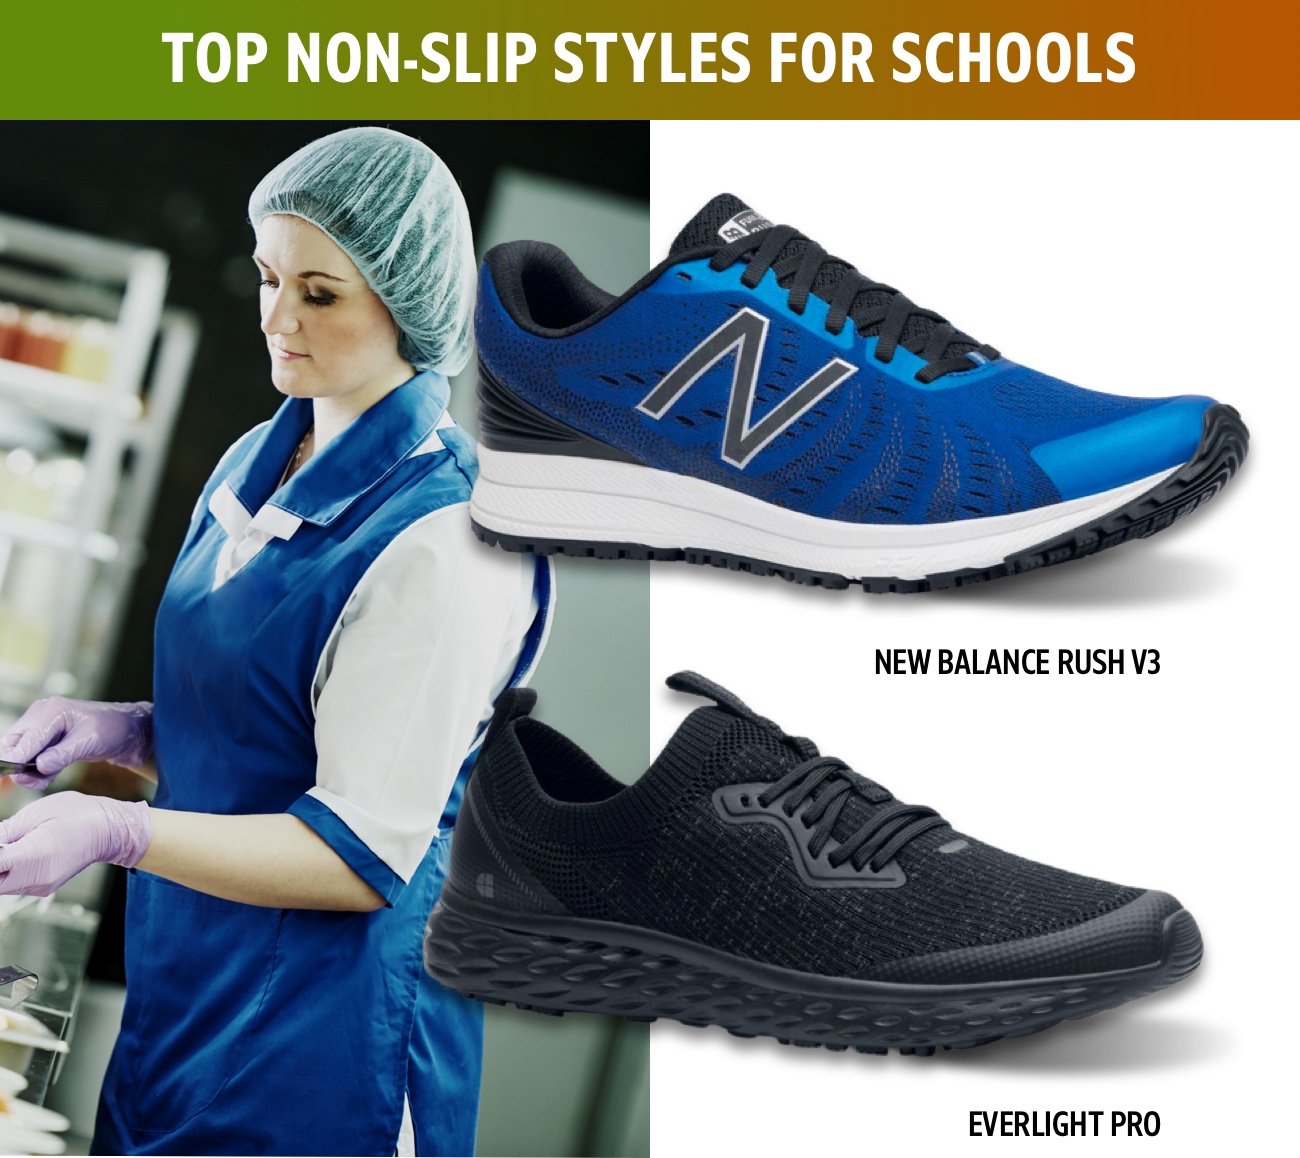 Top non-slip styles for Schools